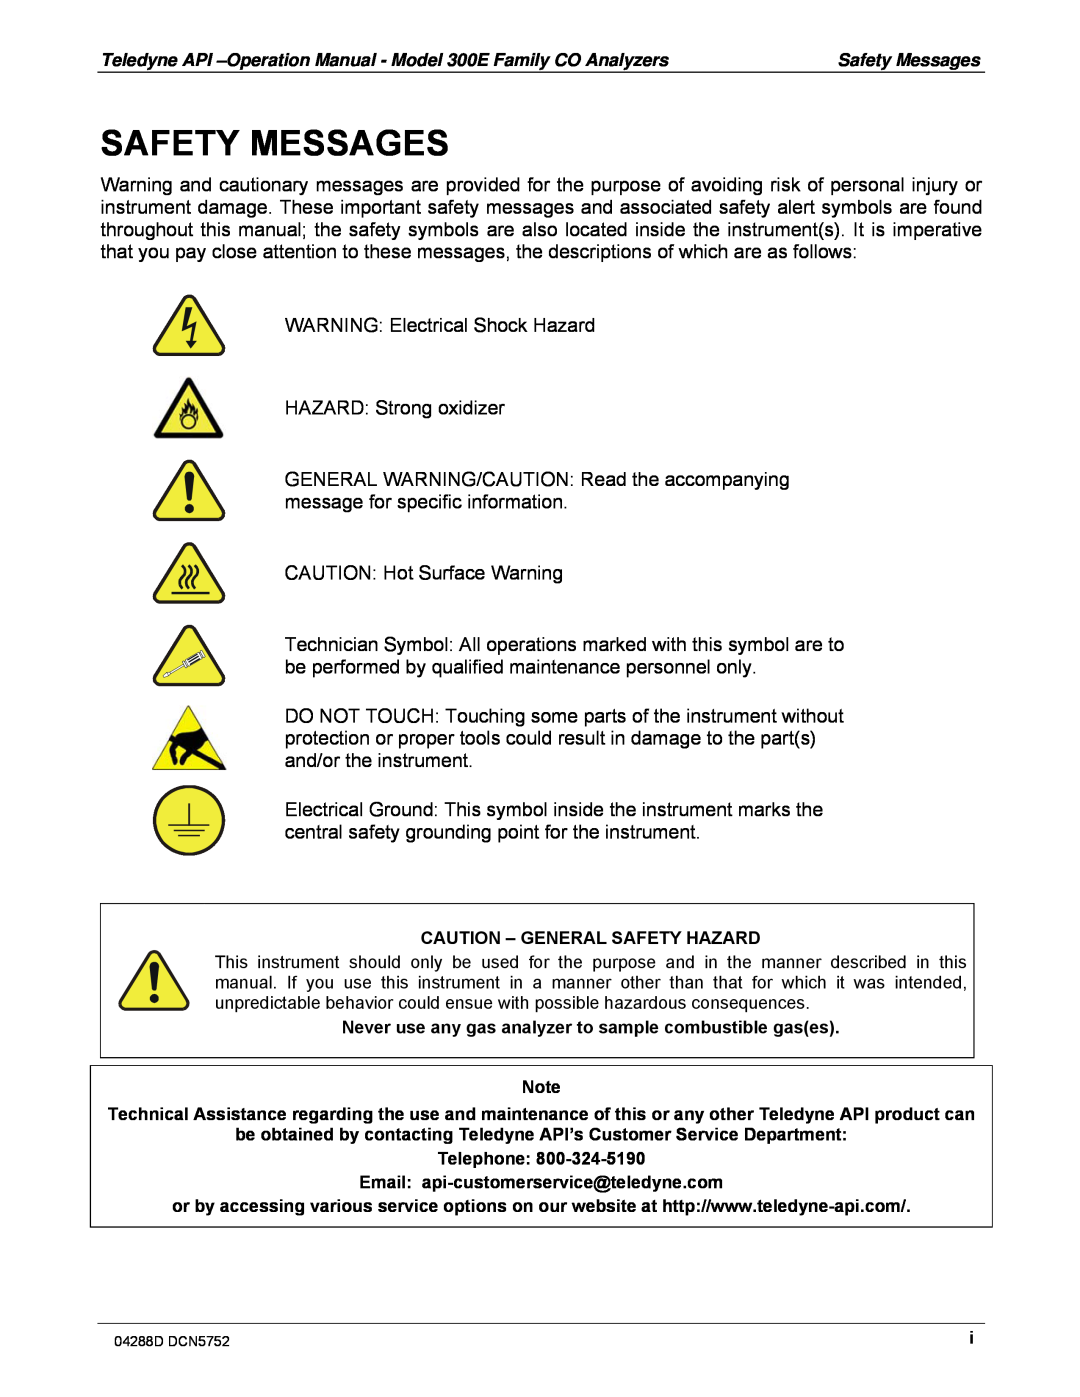 Teledyne M300EM operation manual Safety Messages 